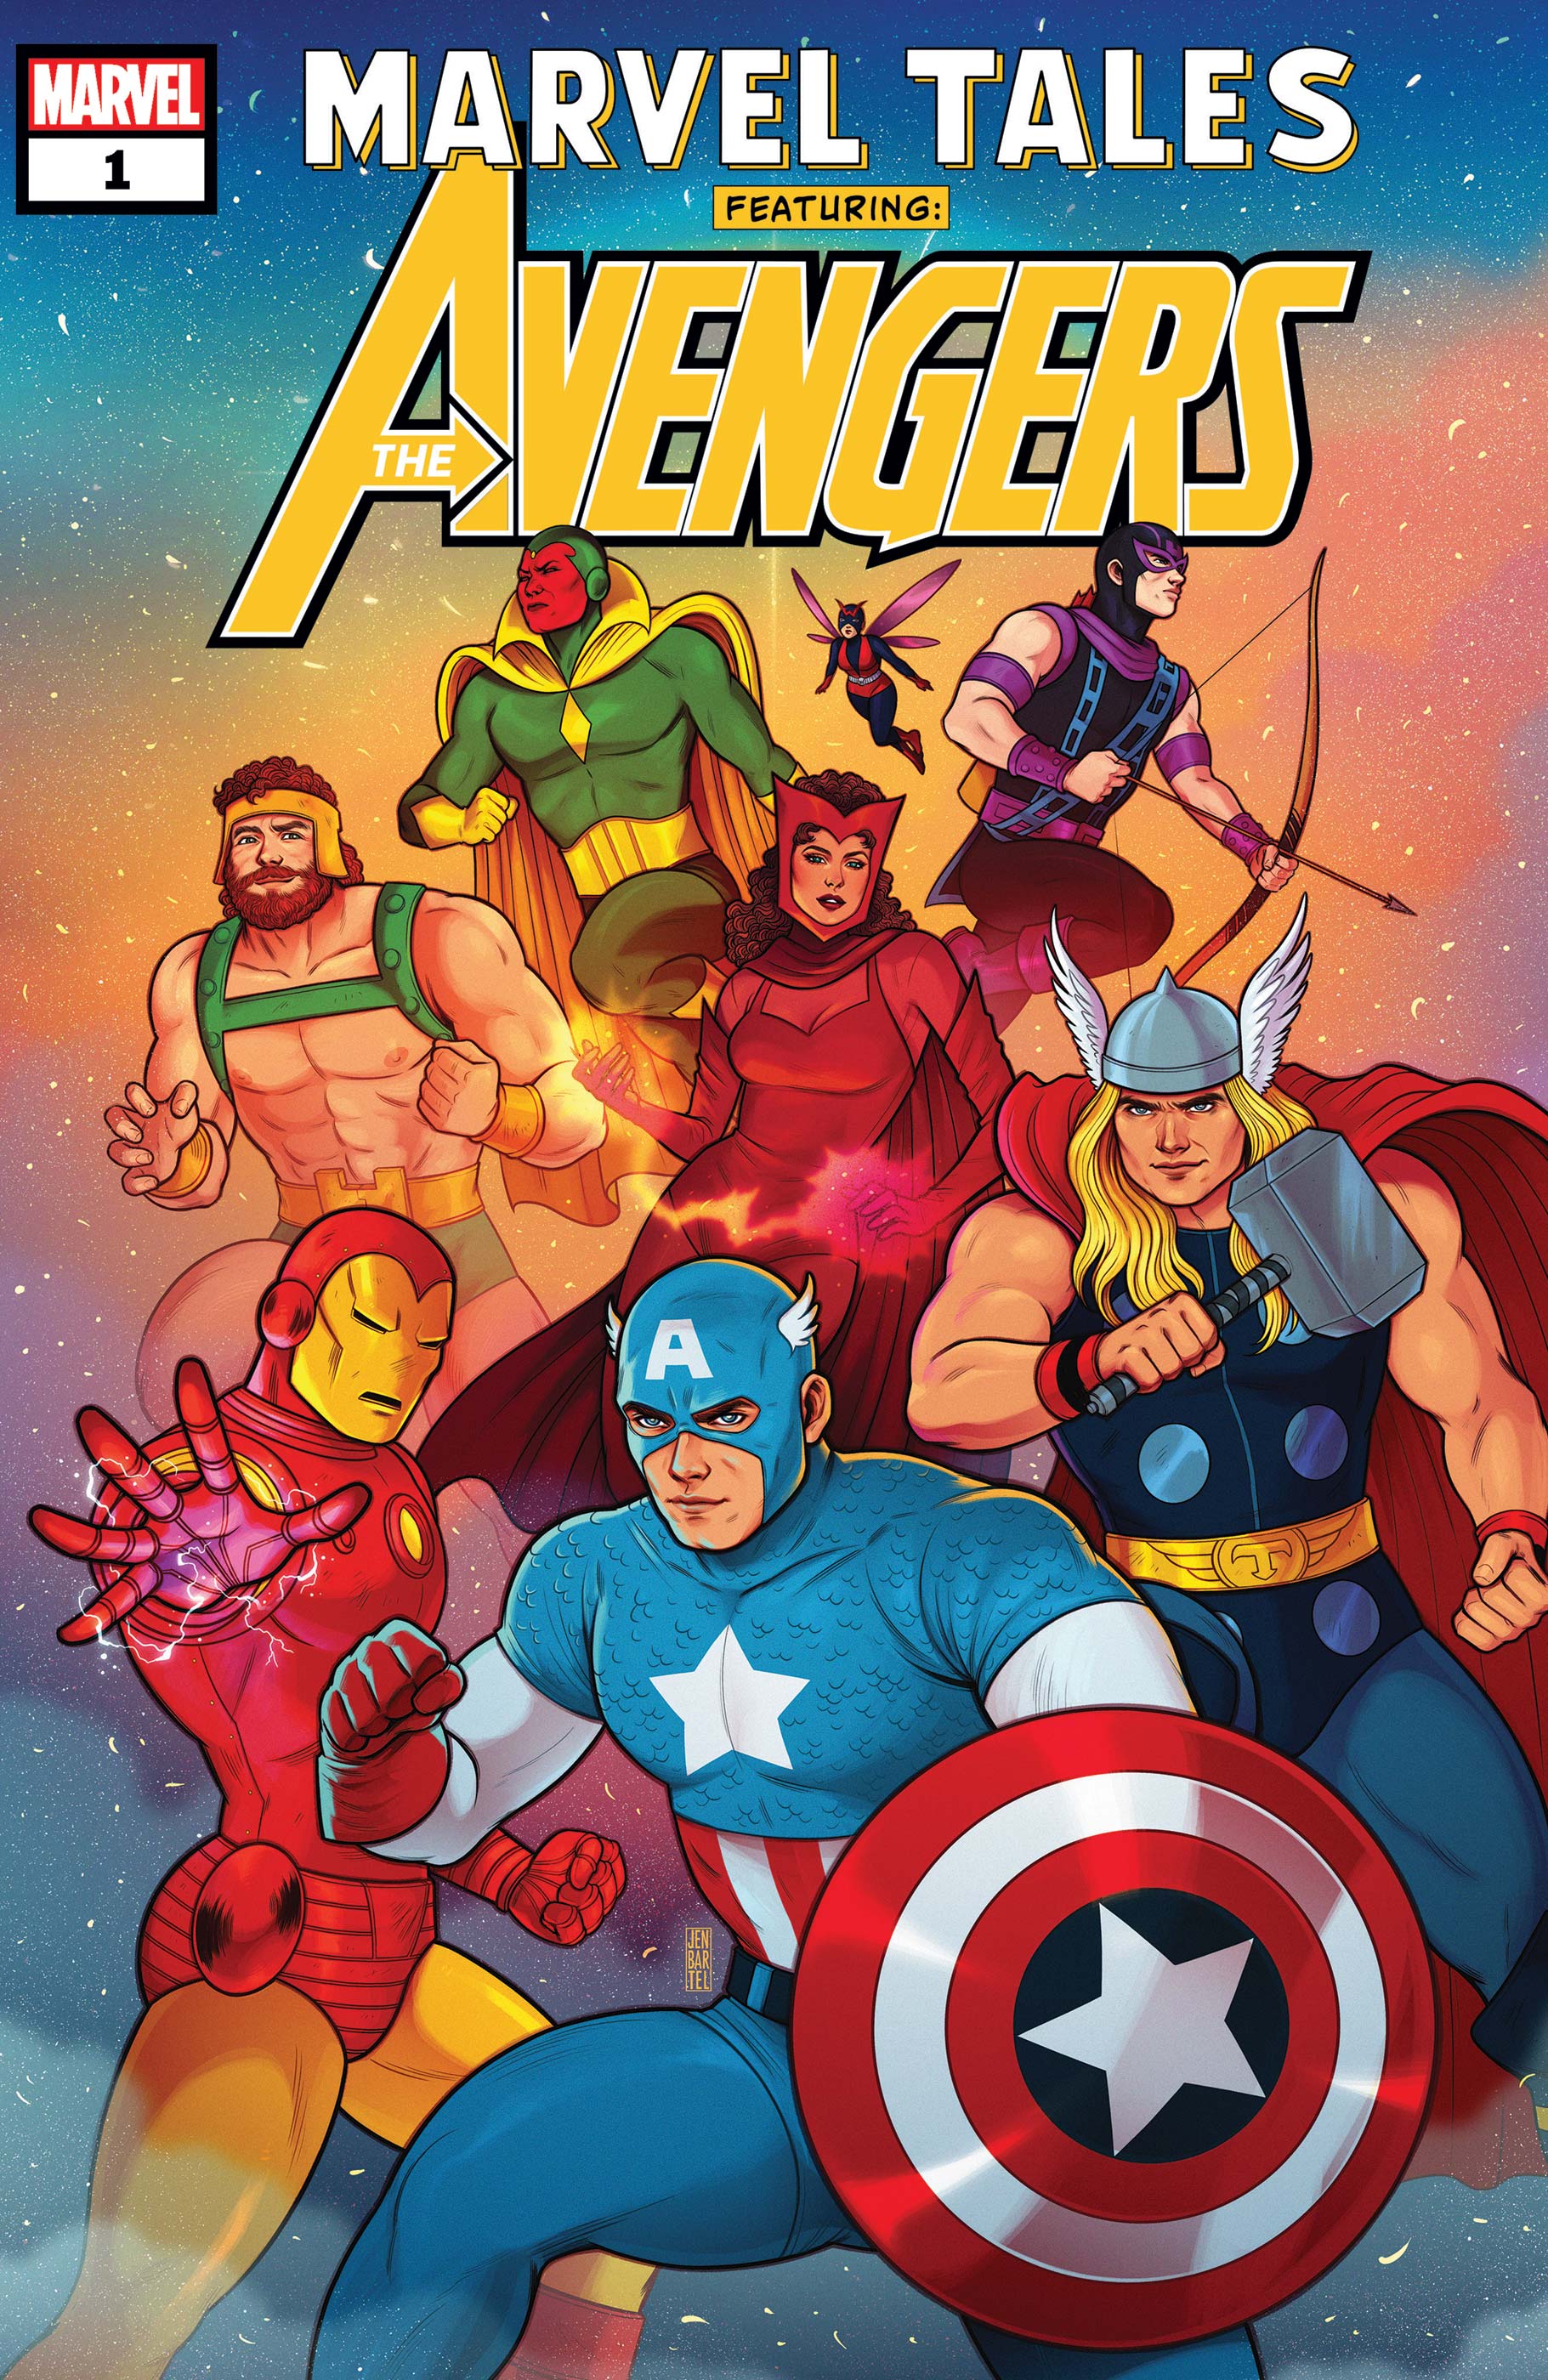 Marvel Tales Captain America #1 Marvel Comics 2019